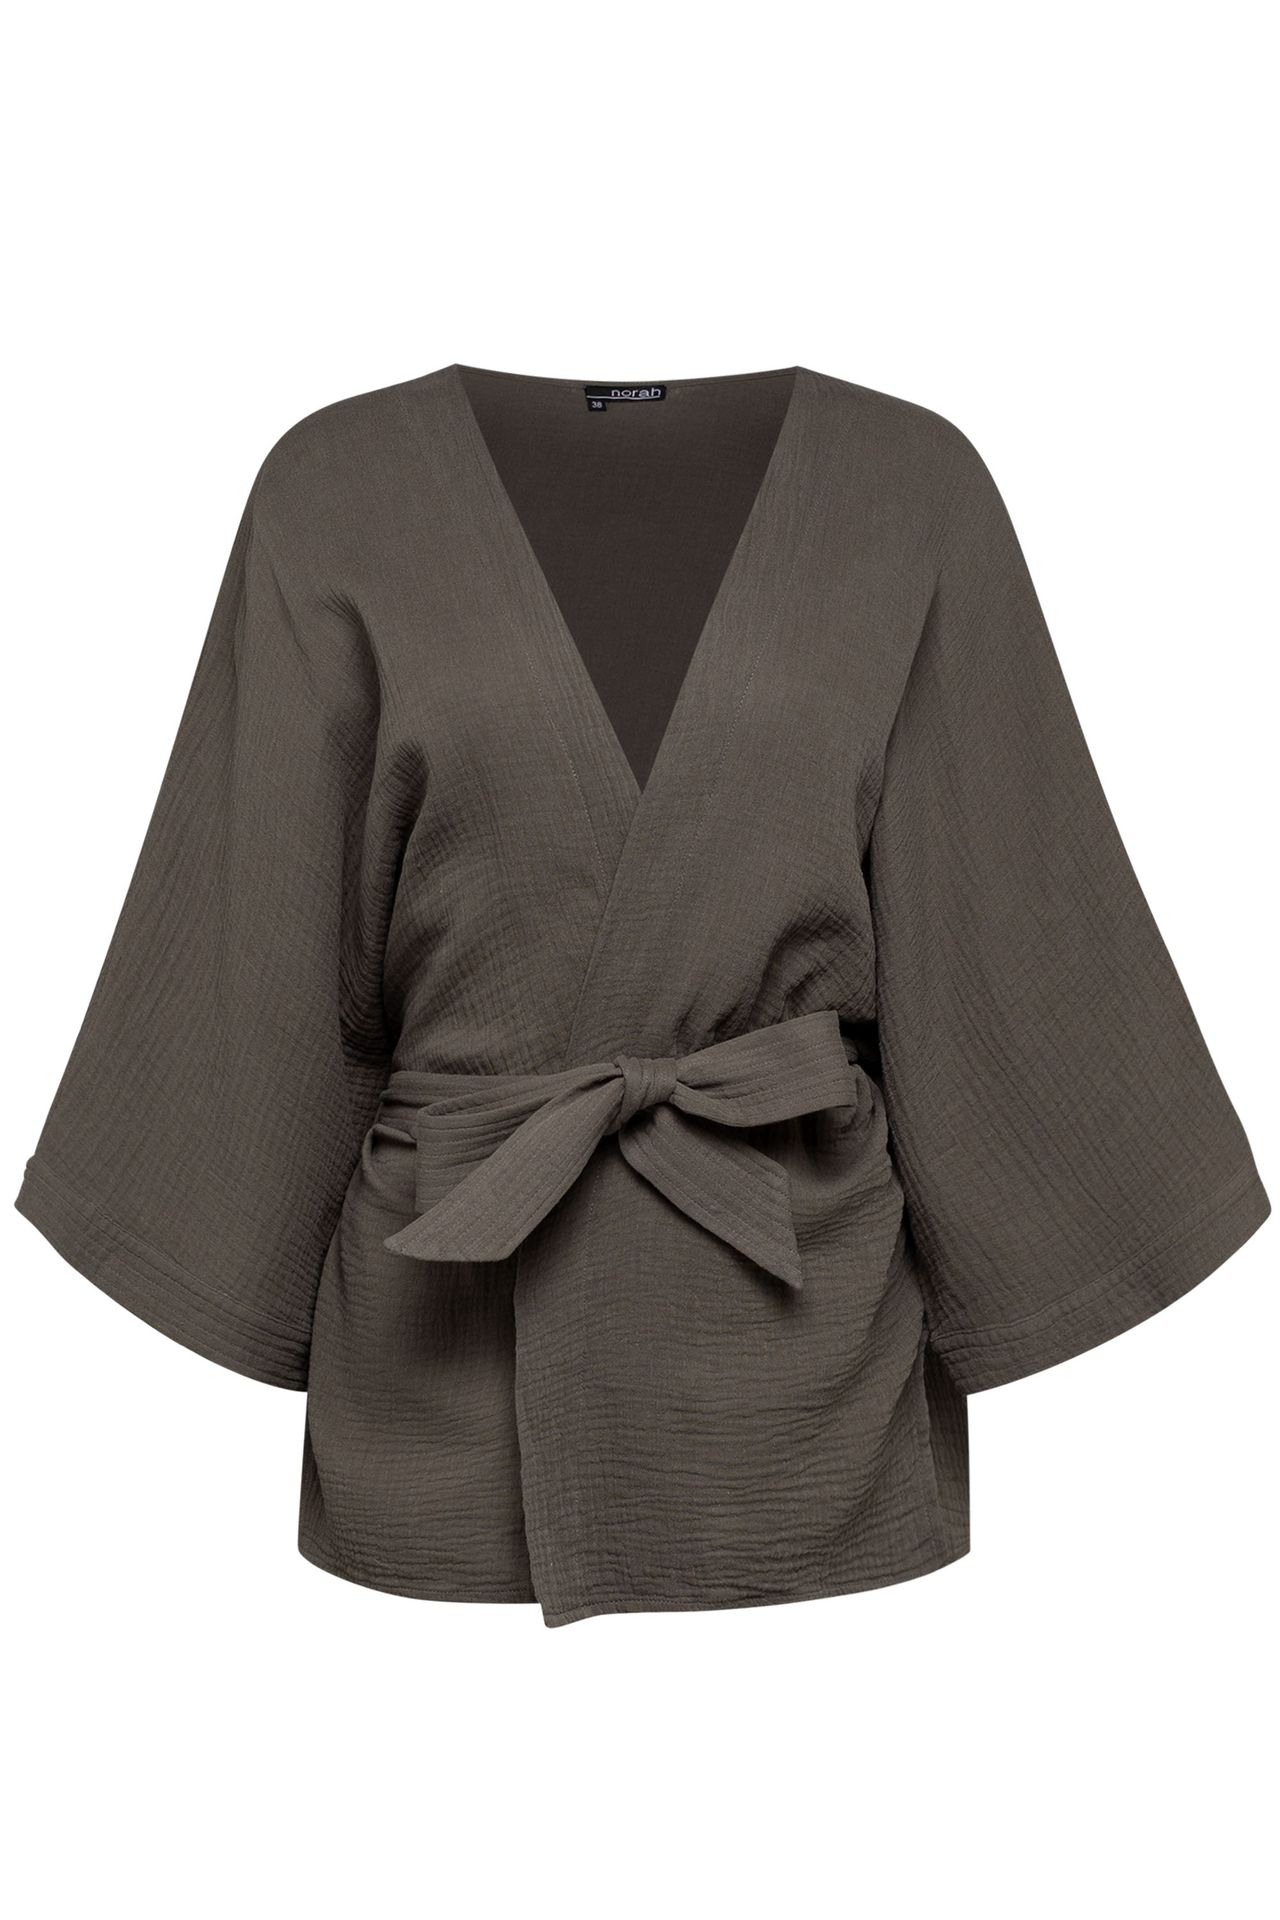 Norah Kimono groen dark army 212579-580